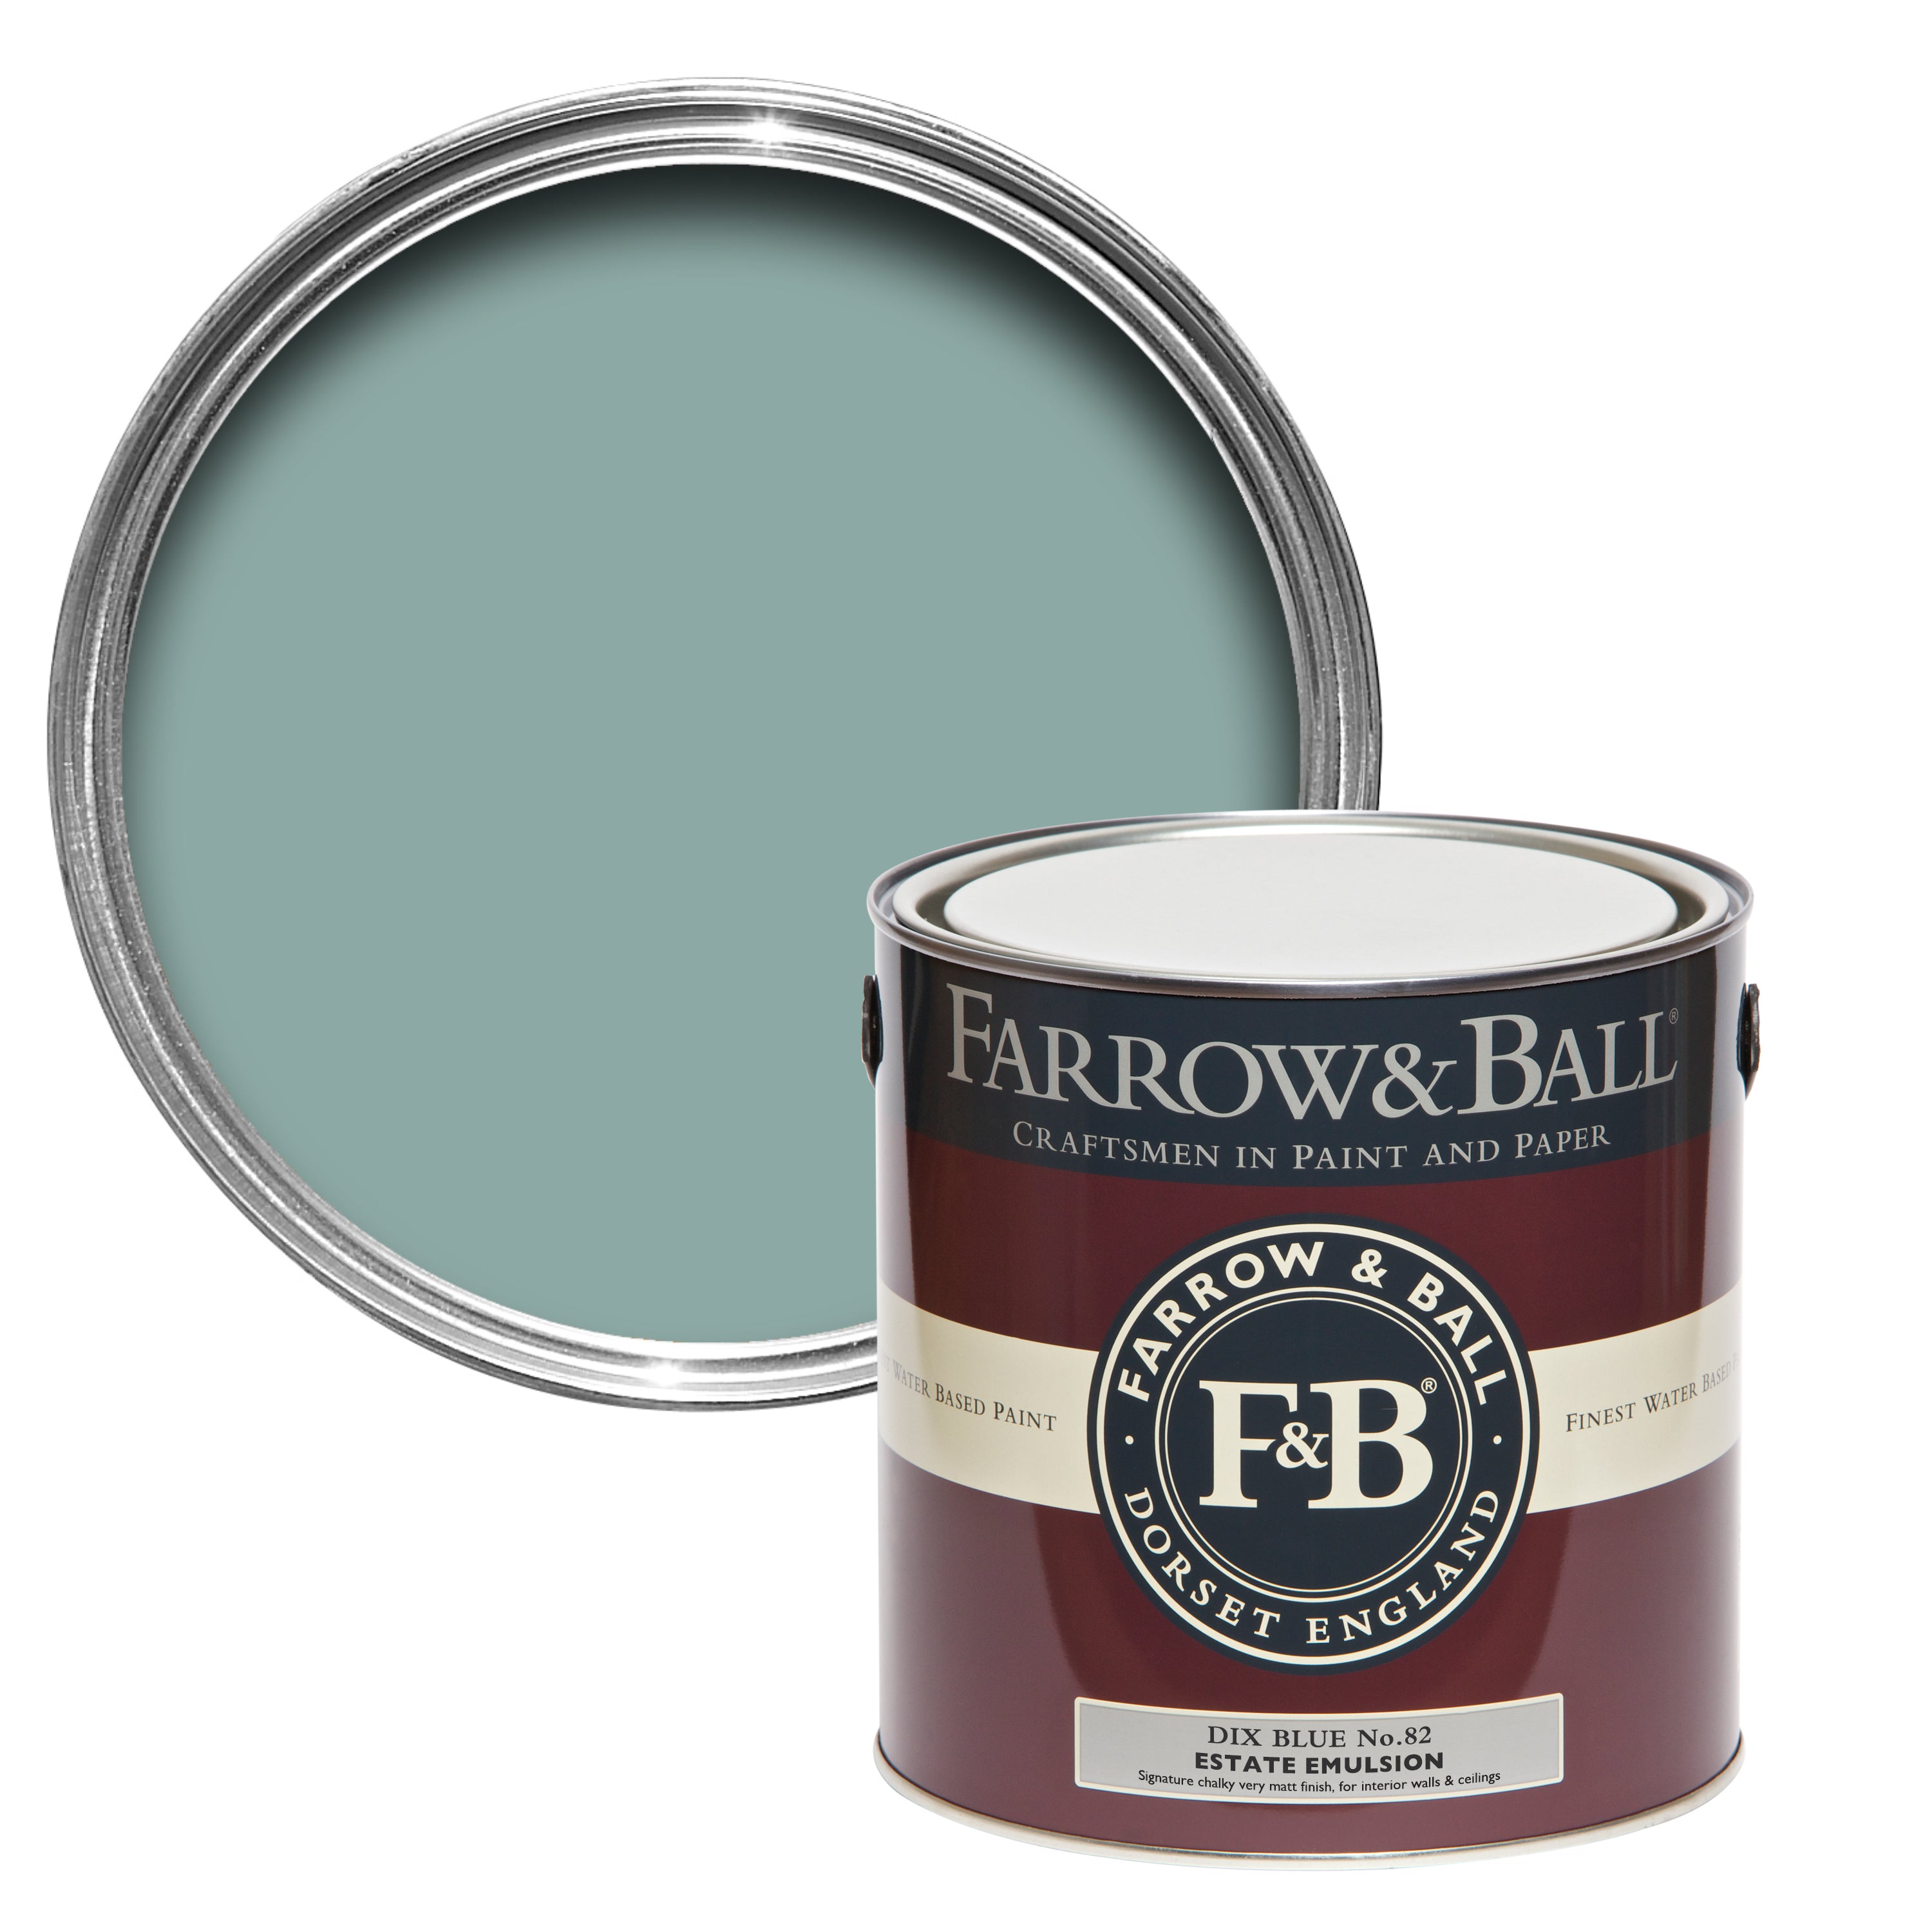 Dix Blue No 82 | Farrow & Ball